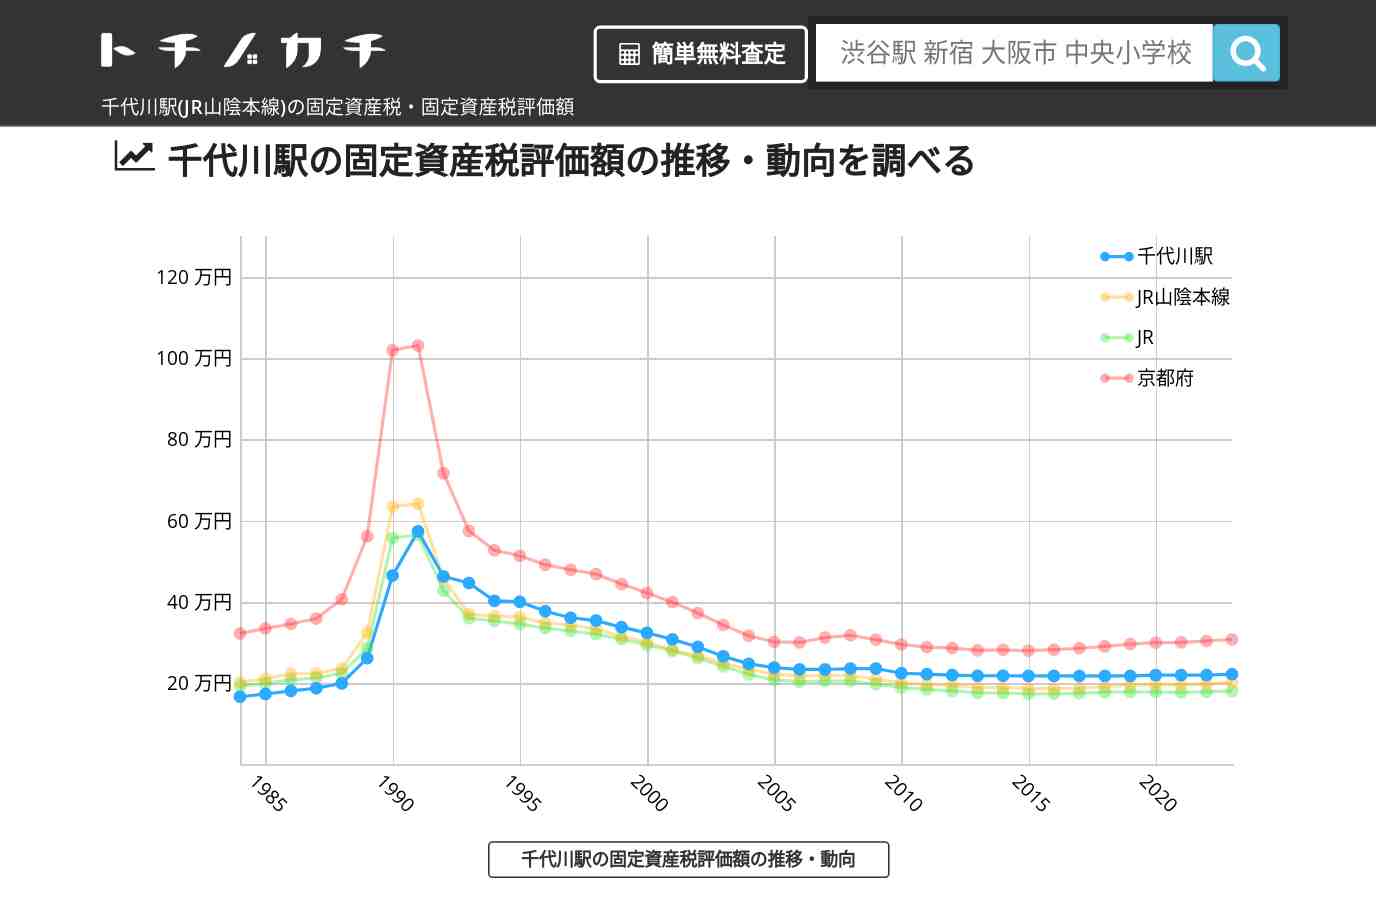 千代川駅(JR山陰本線)の固定資産税・固定資産税評価額 | トチノカチ